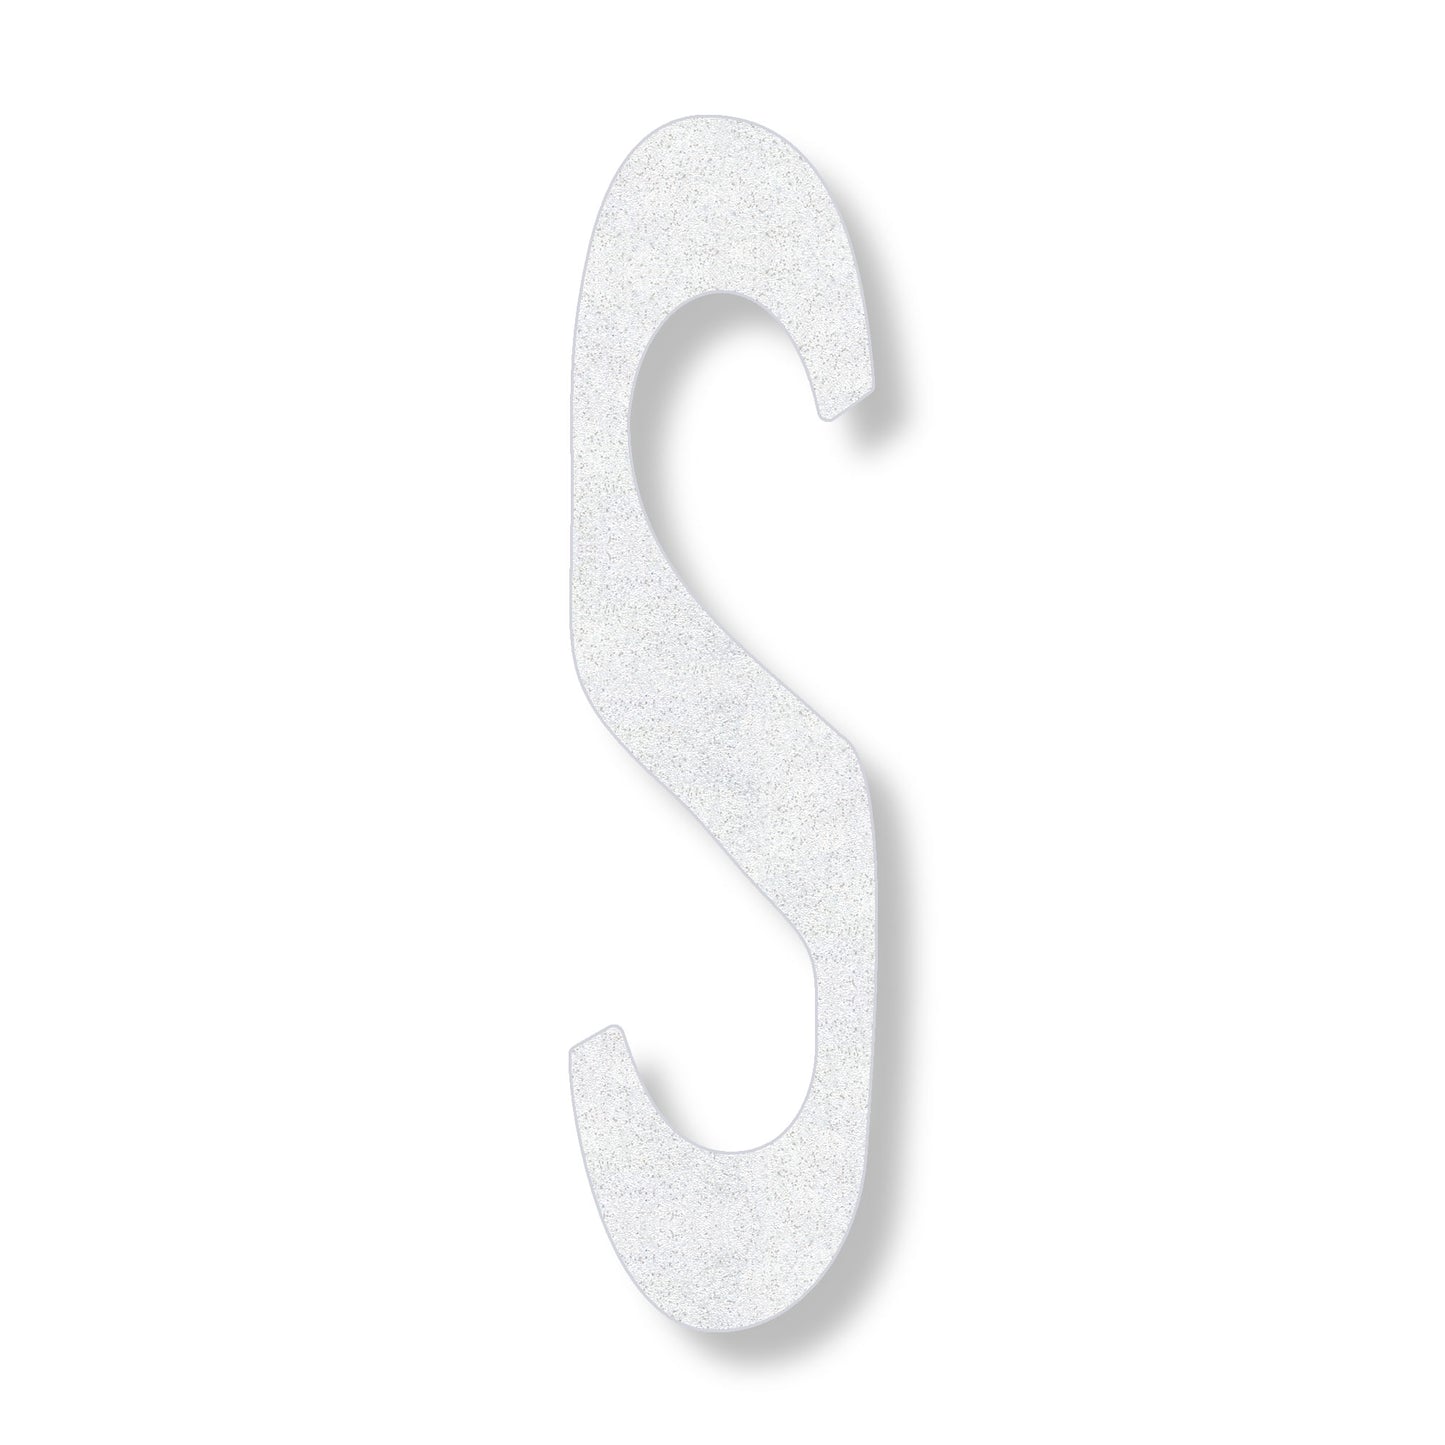 Letter S in white